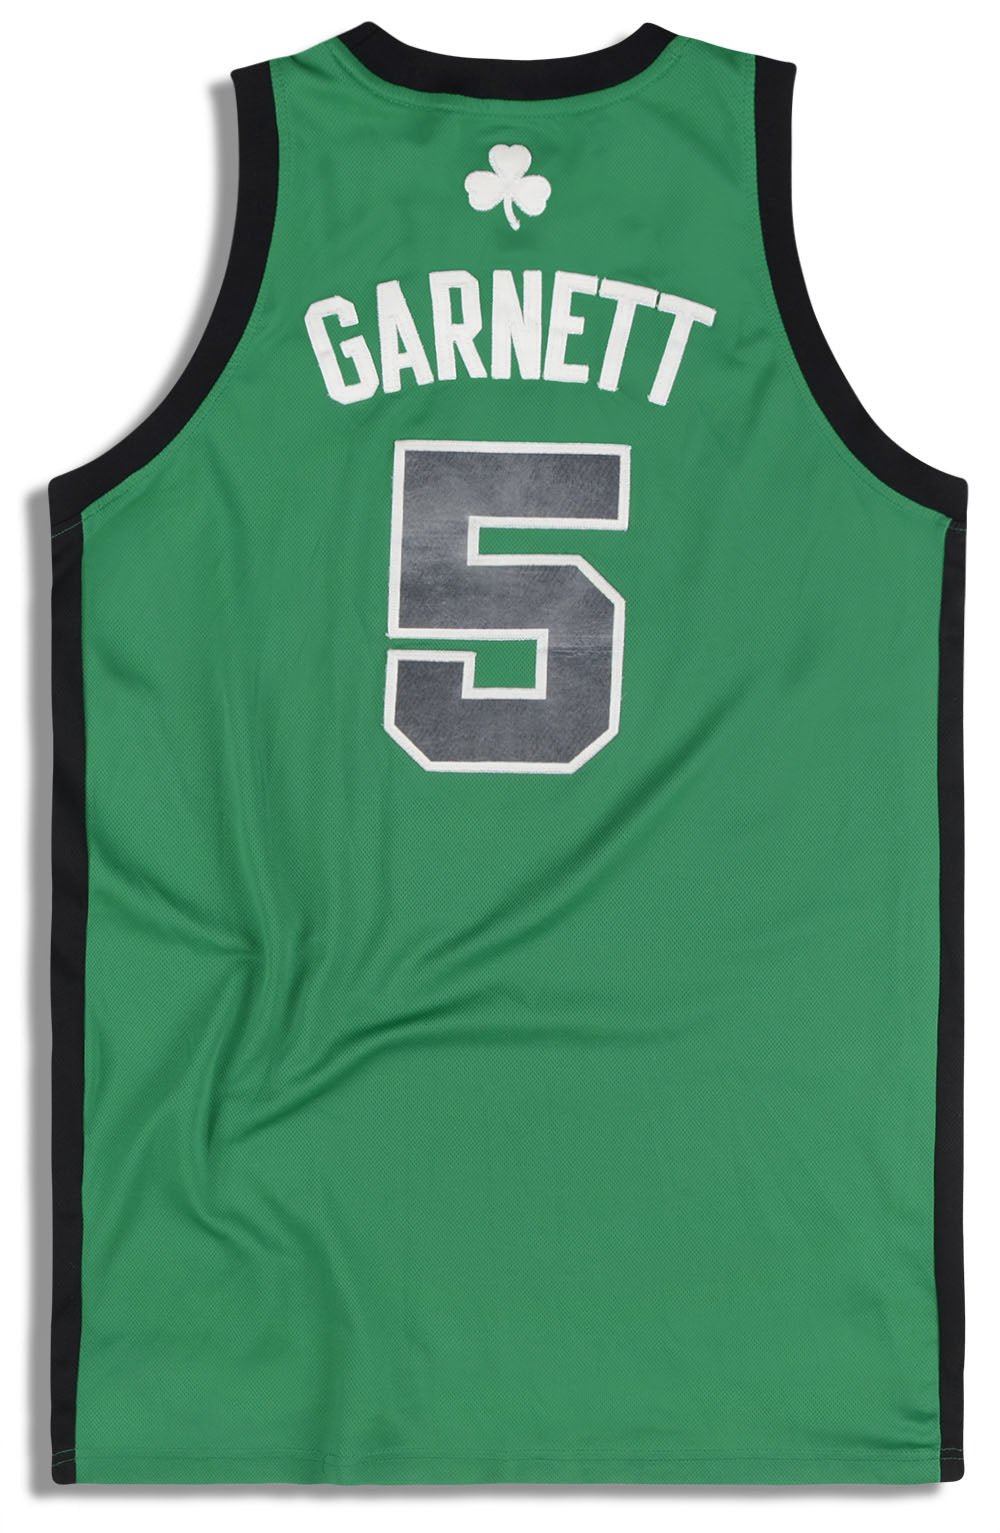 Boston Celtics Basketball Jersey 2010/11 by Adidas-Garnett 5